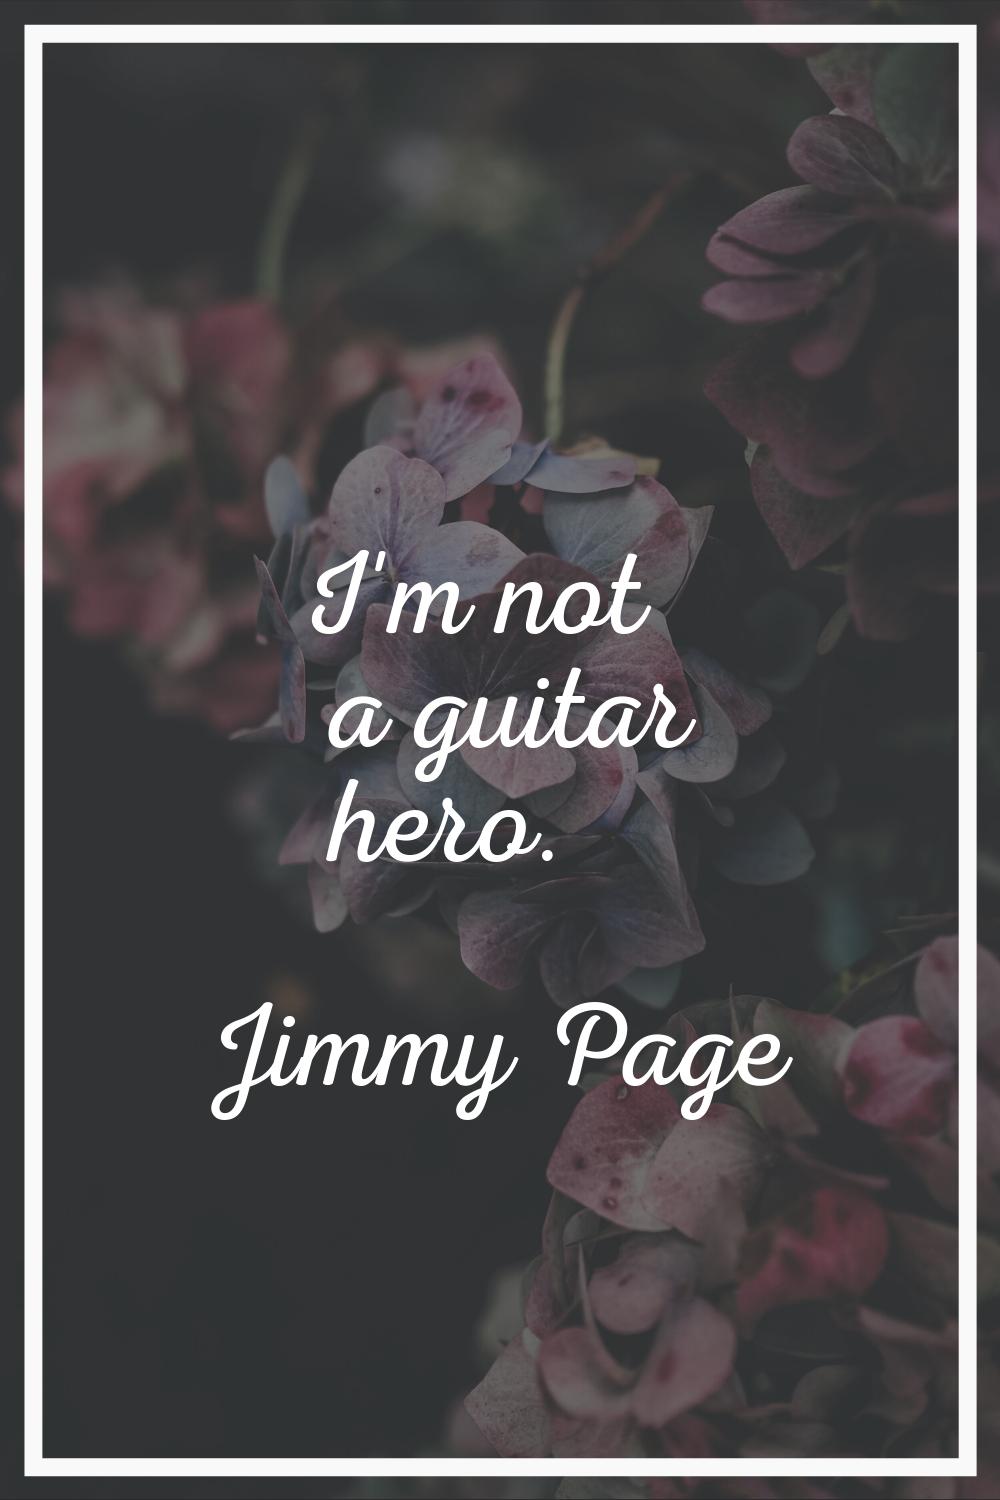 I'm not a guitar hero.